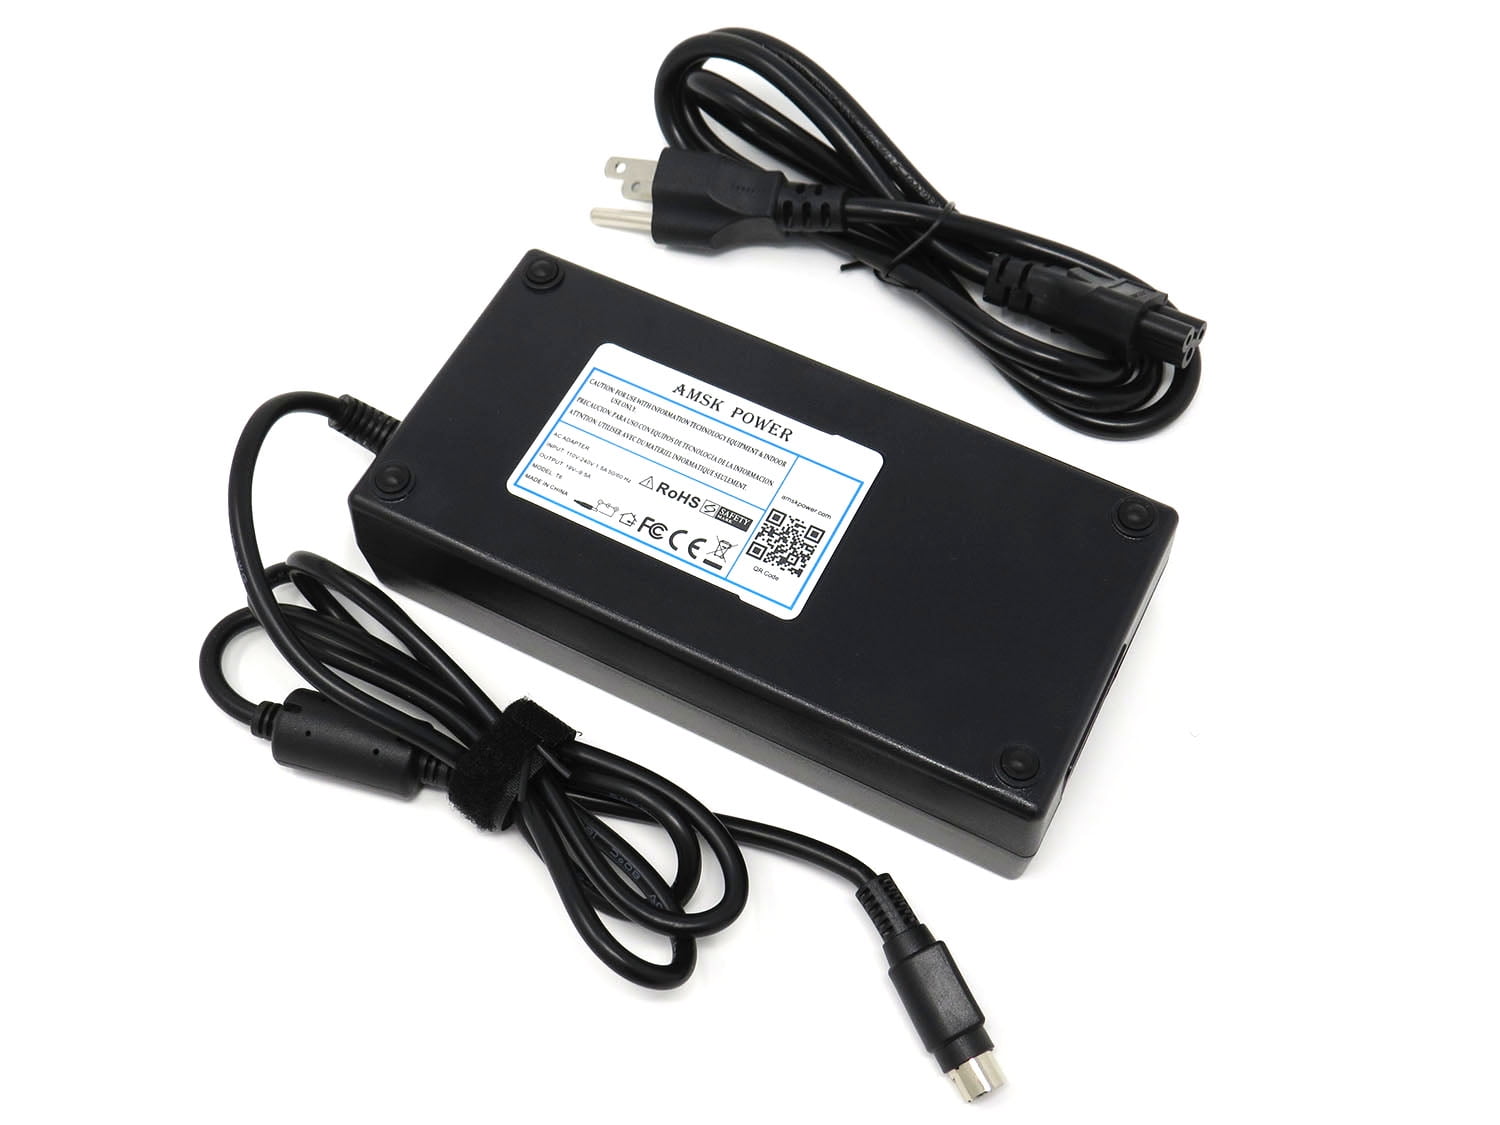 Toshiba Qosmio AVPC X505-Q896 laptop power supply ac adapter cord cable charger 